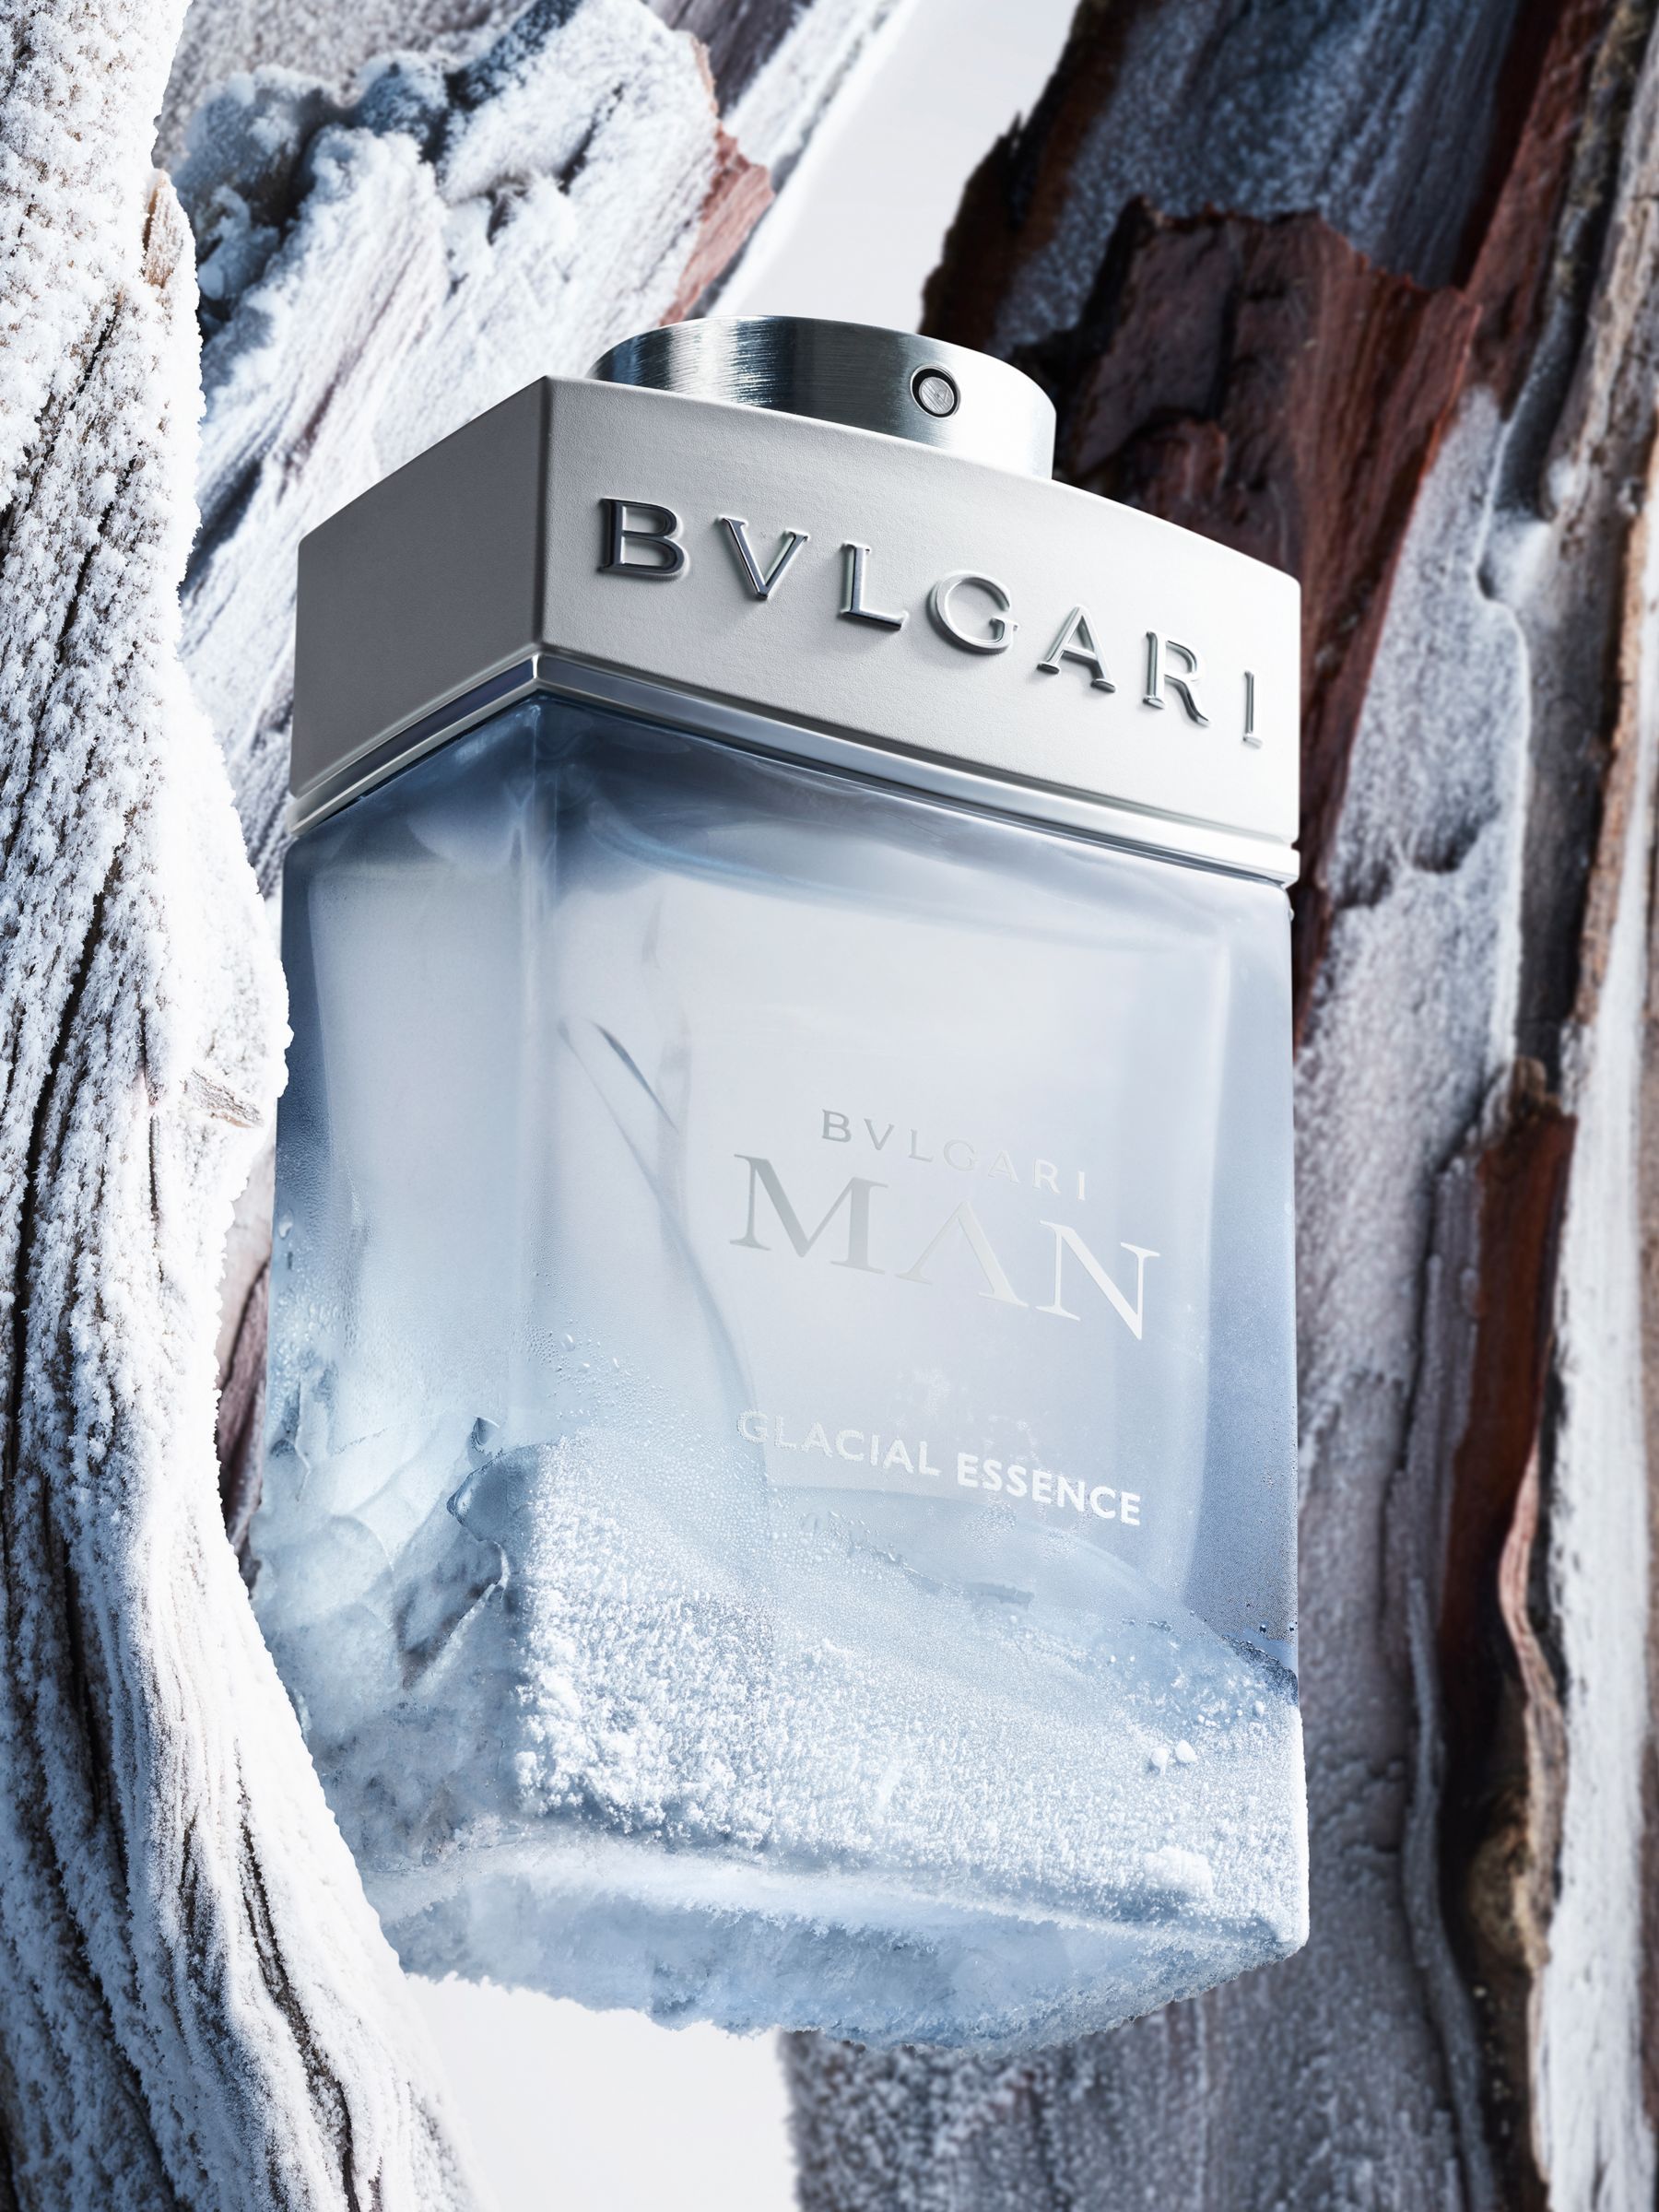 BVLGARI Man Glacial Essence Eau de Parfum, 60ml at John